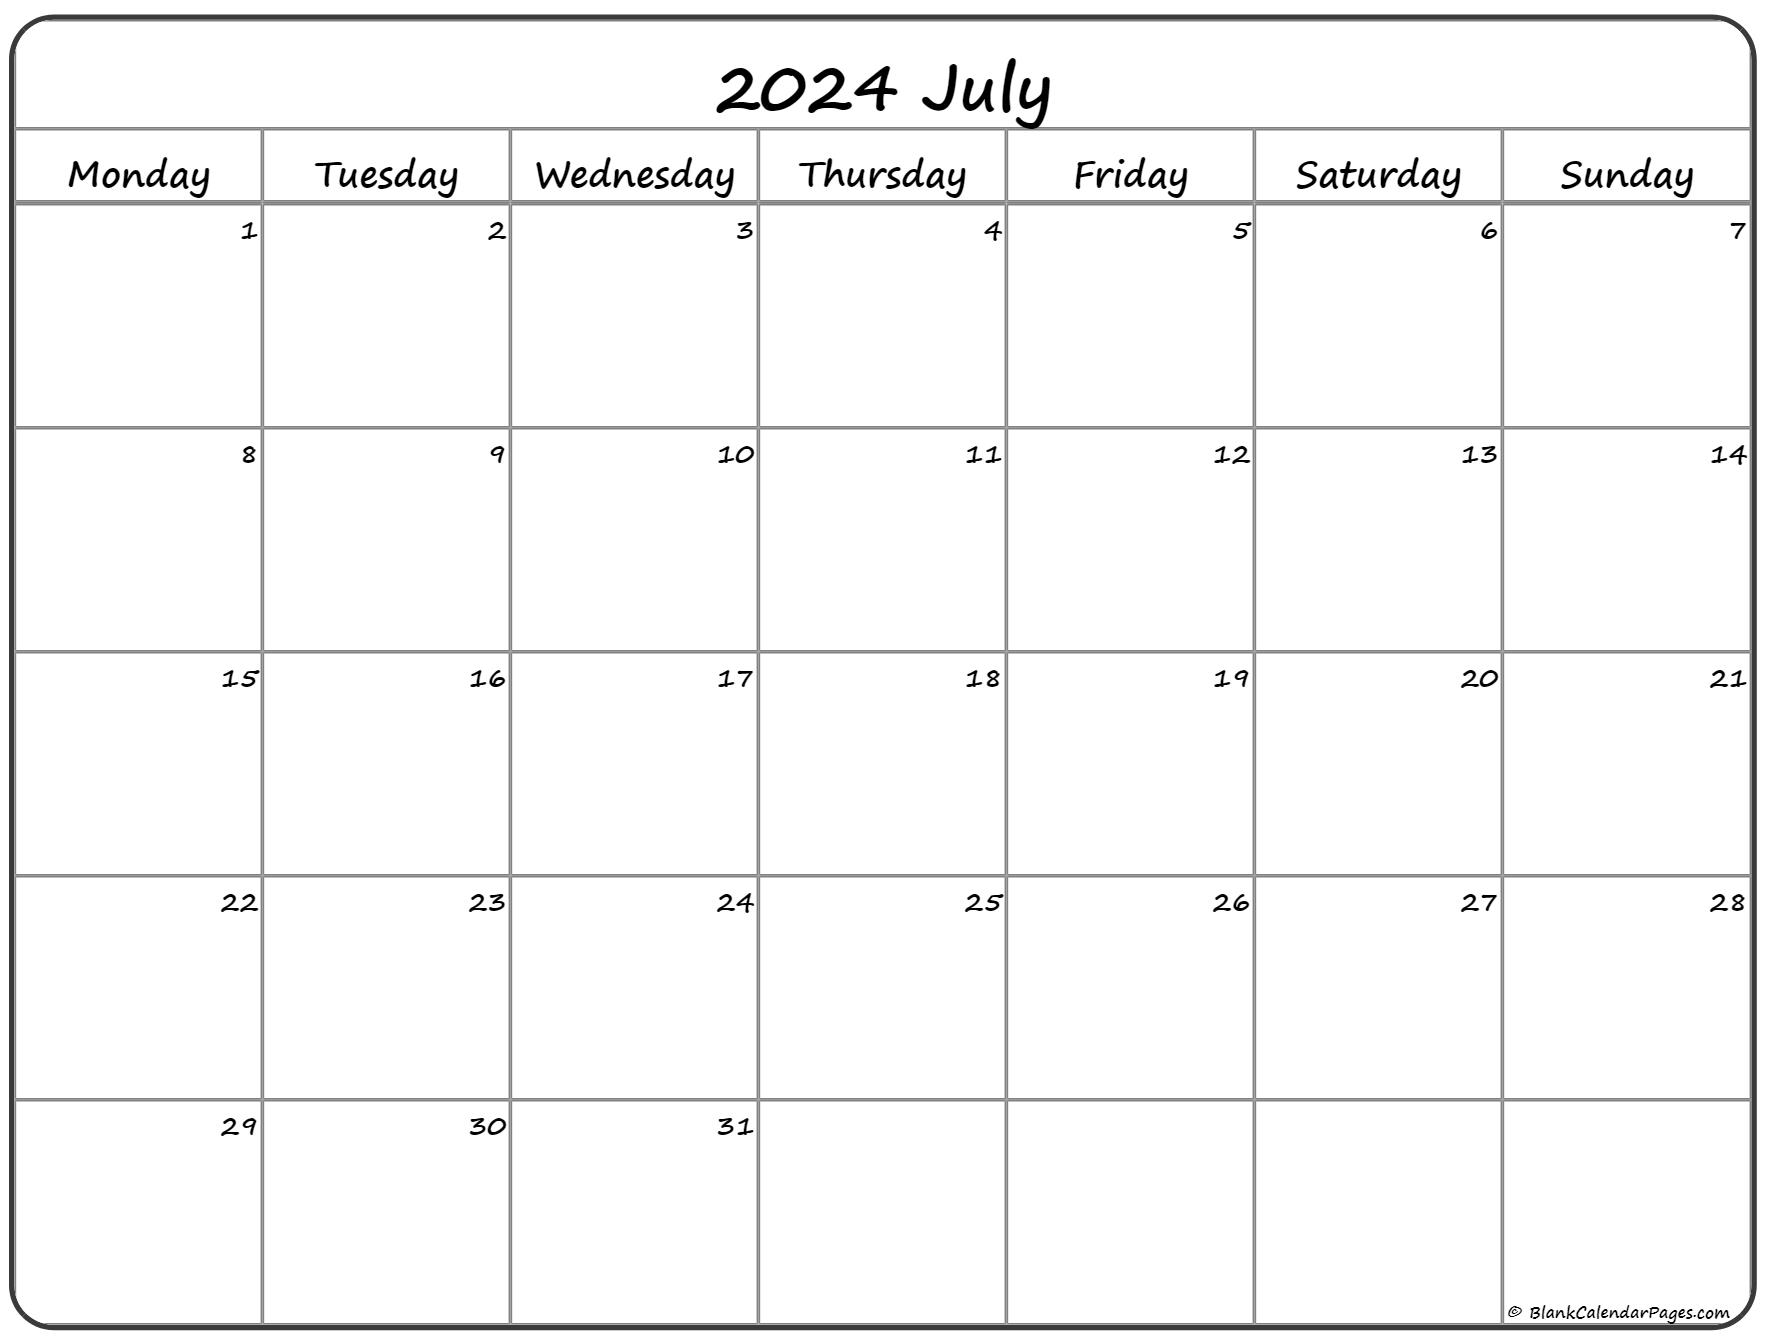 Friday July 14 2024 Jolie Madelyn